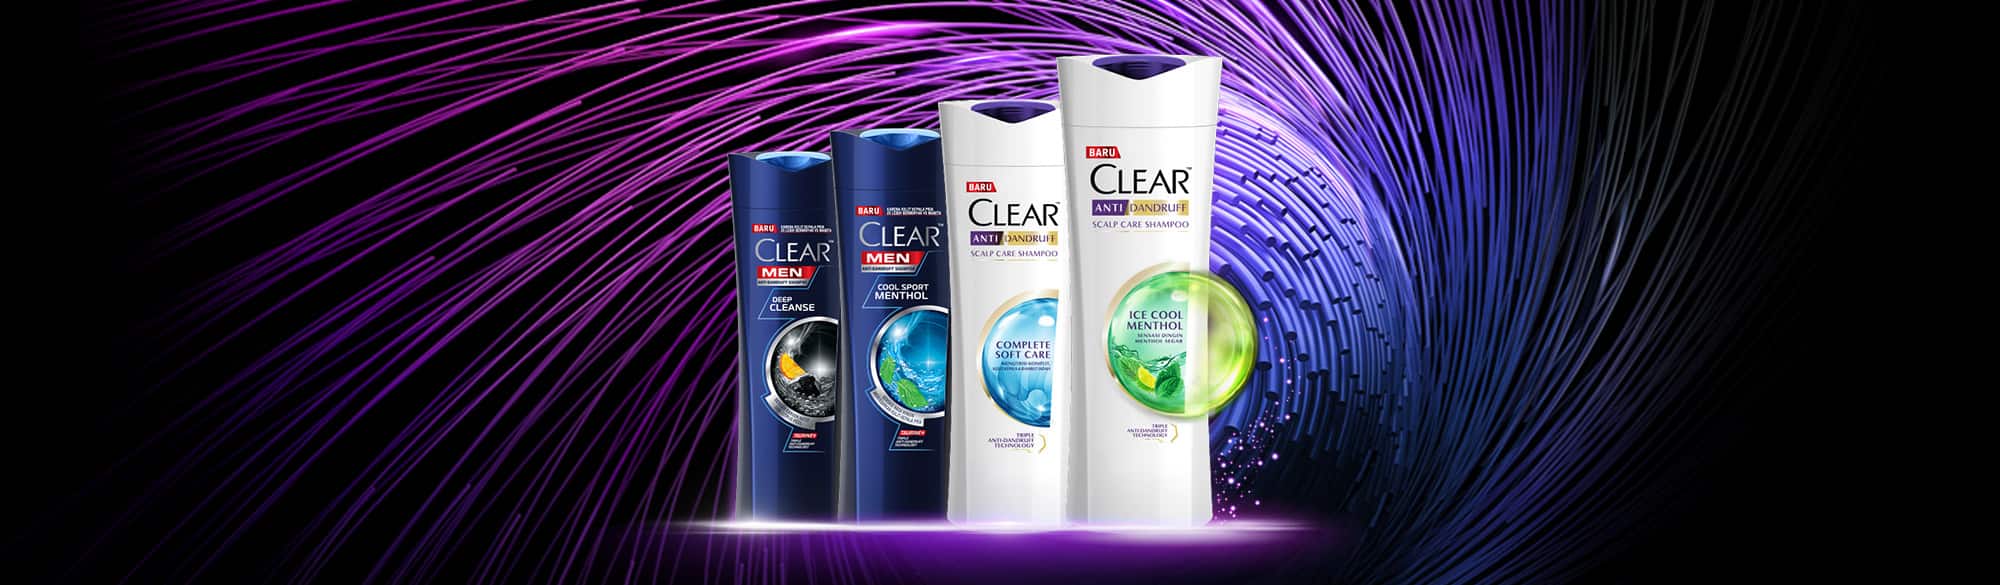 Produk Shampo Anti Ketombe Clear Pria